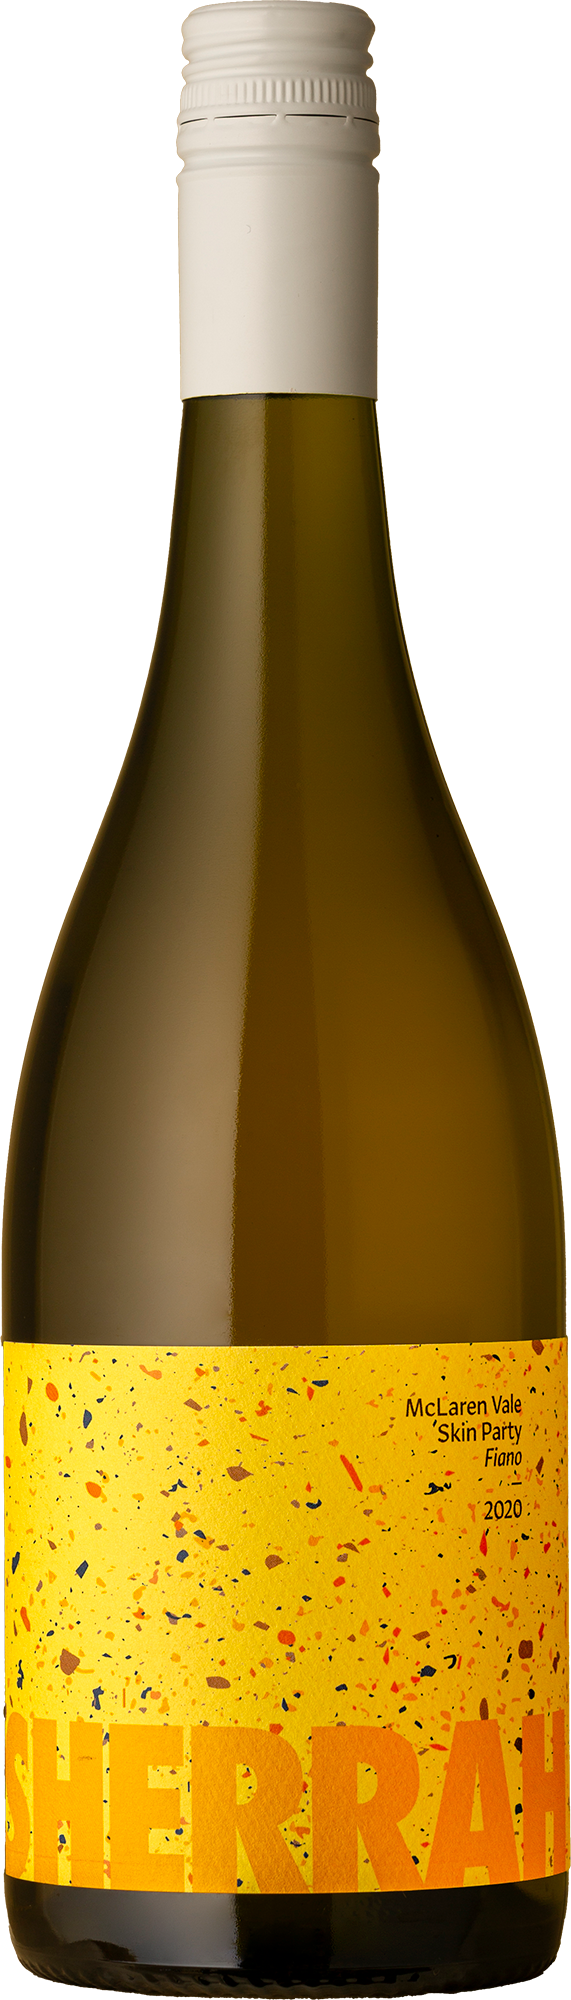 Sherrah - Skin Party Fiano 2020 Orange Wine